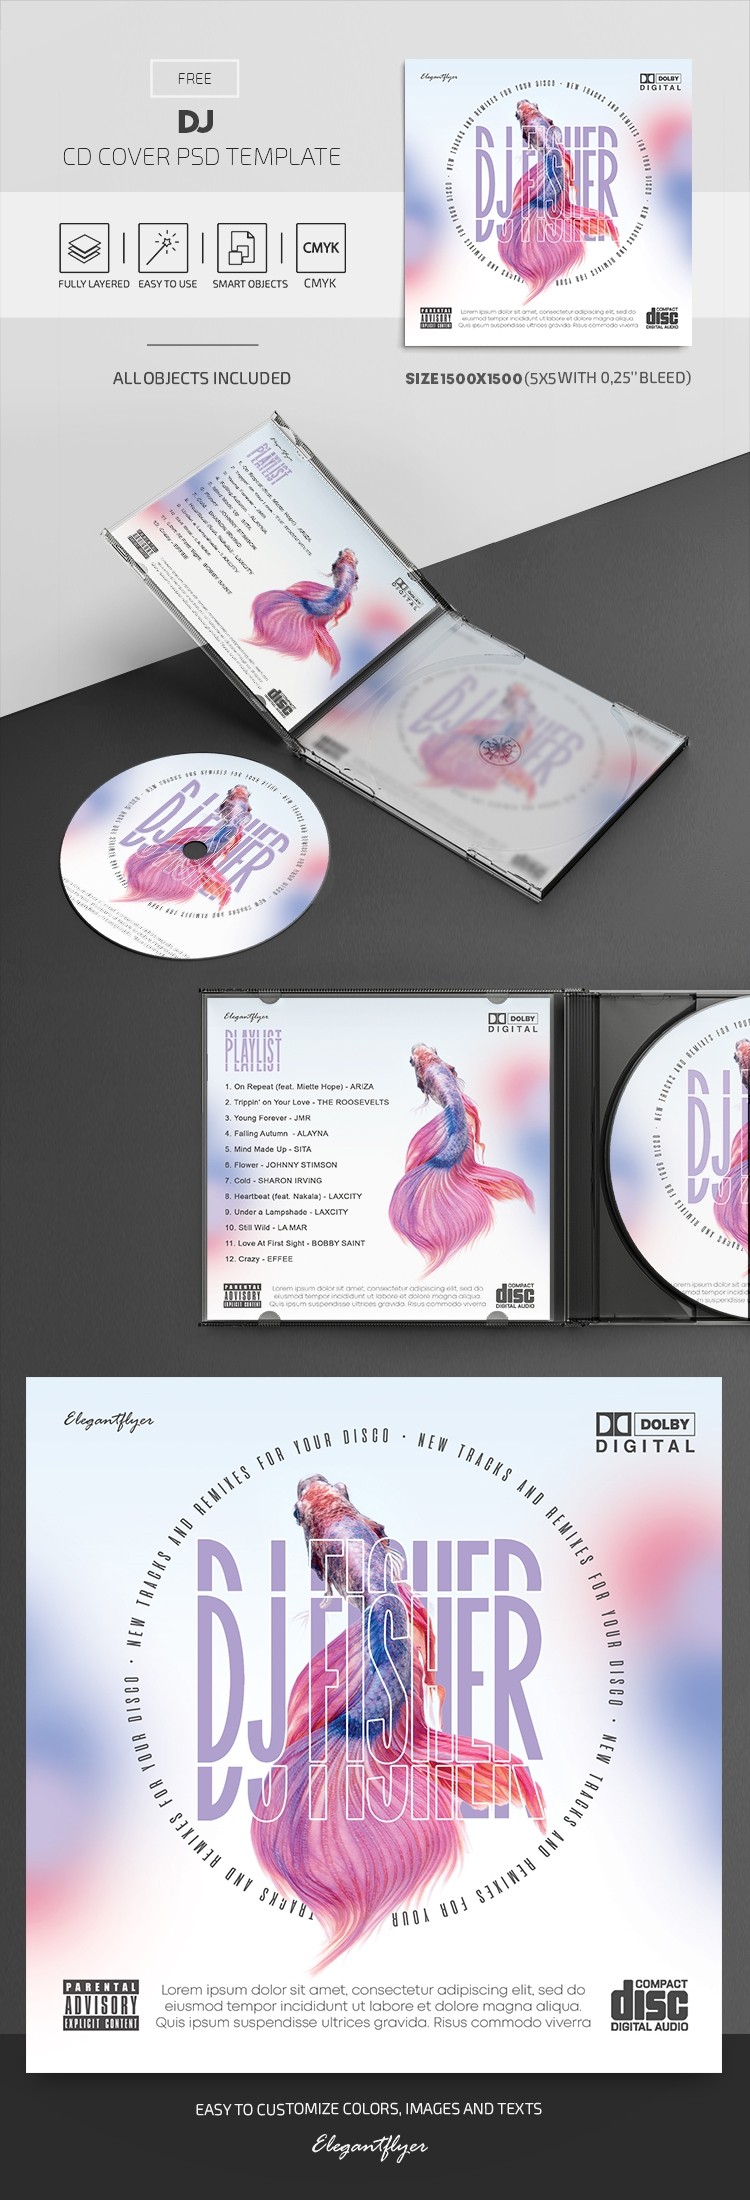 Pochette de CD minimaliste du DJ by ElegantFlyer